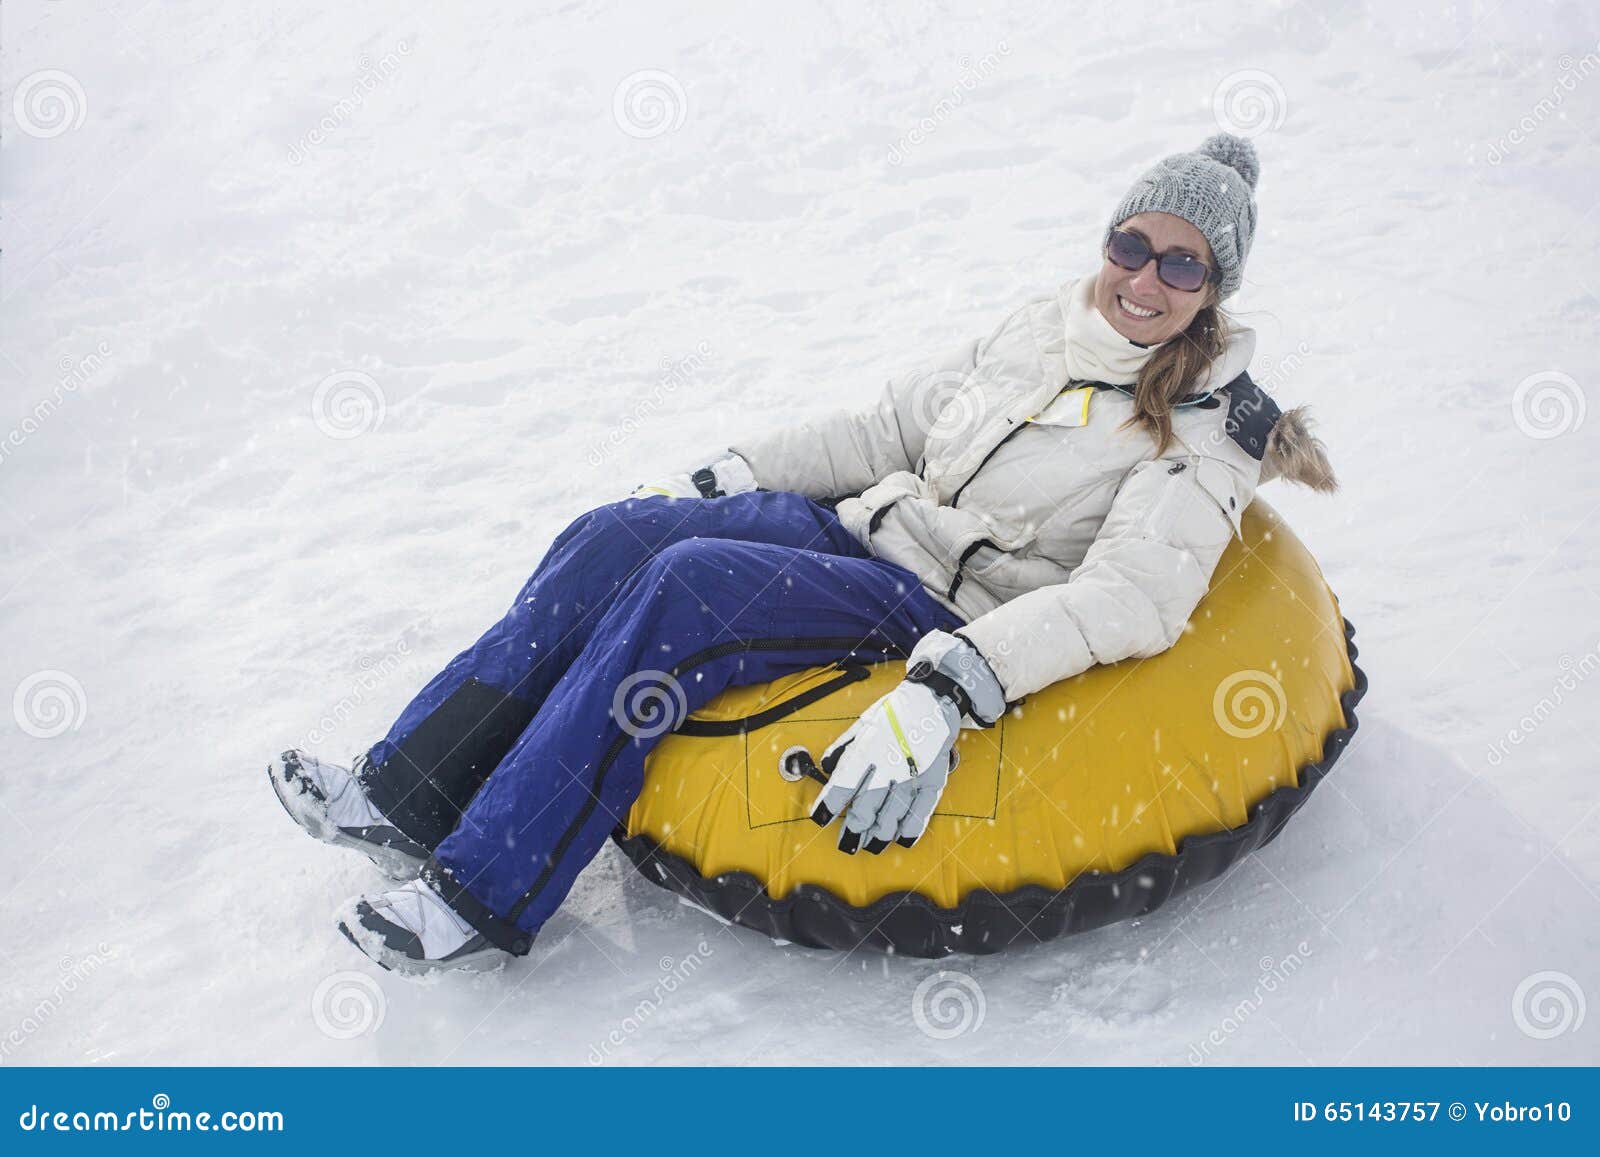 woman sledding down a hill on a snow tube